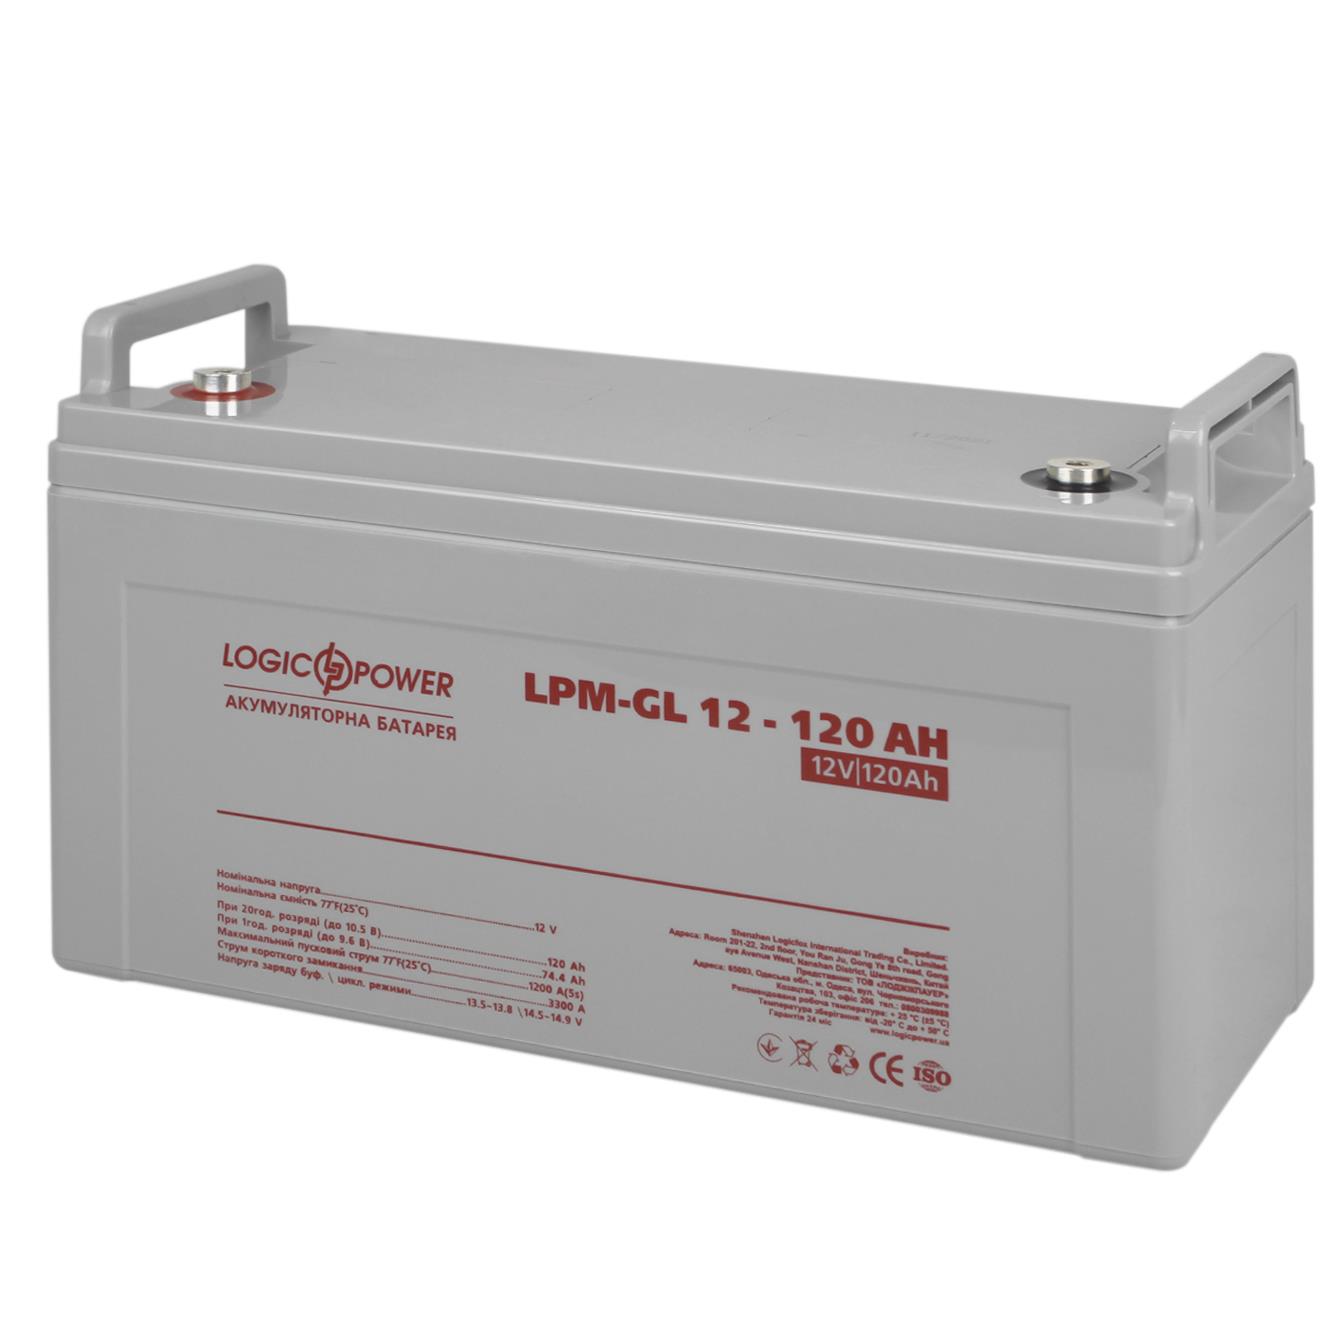 LogicPower LPM-GL 12V - 120 Ah (3870)